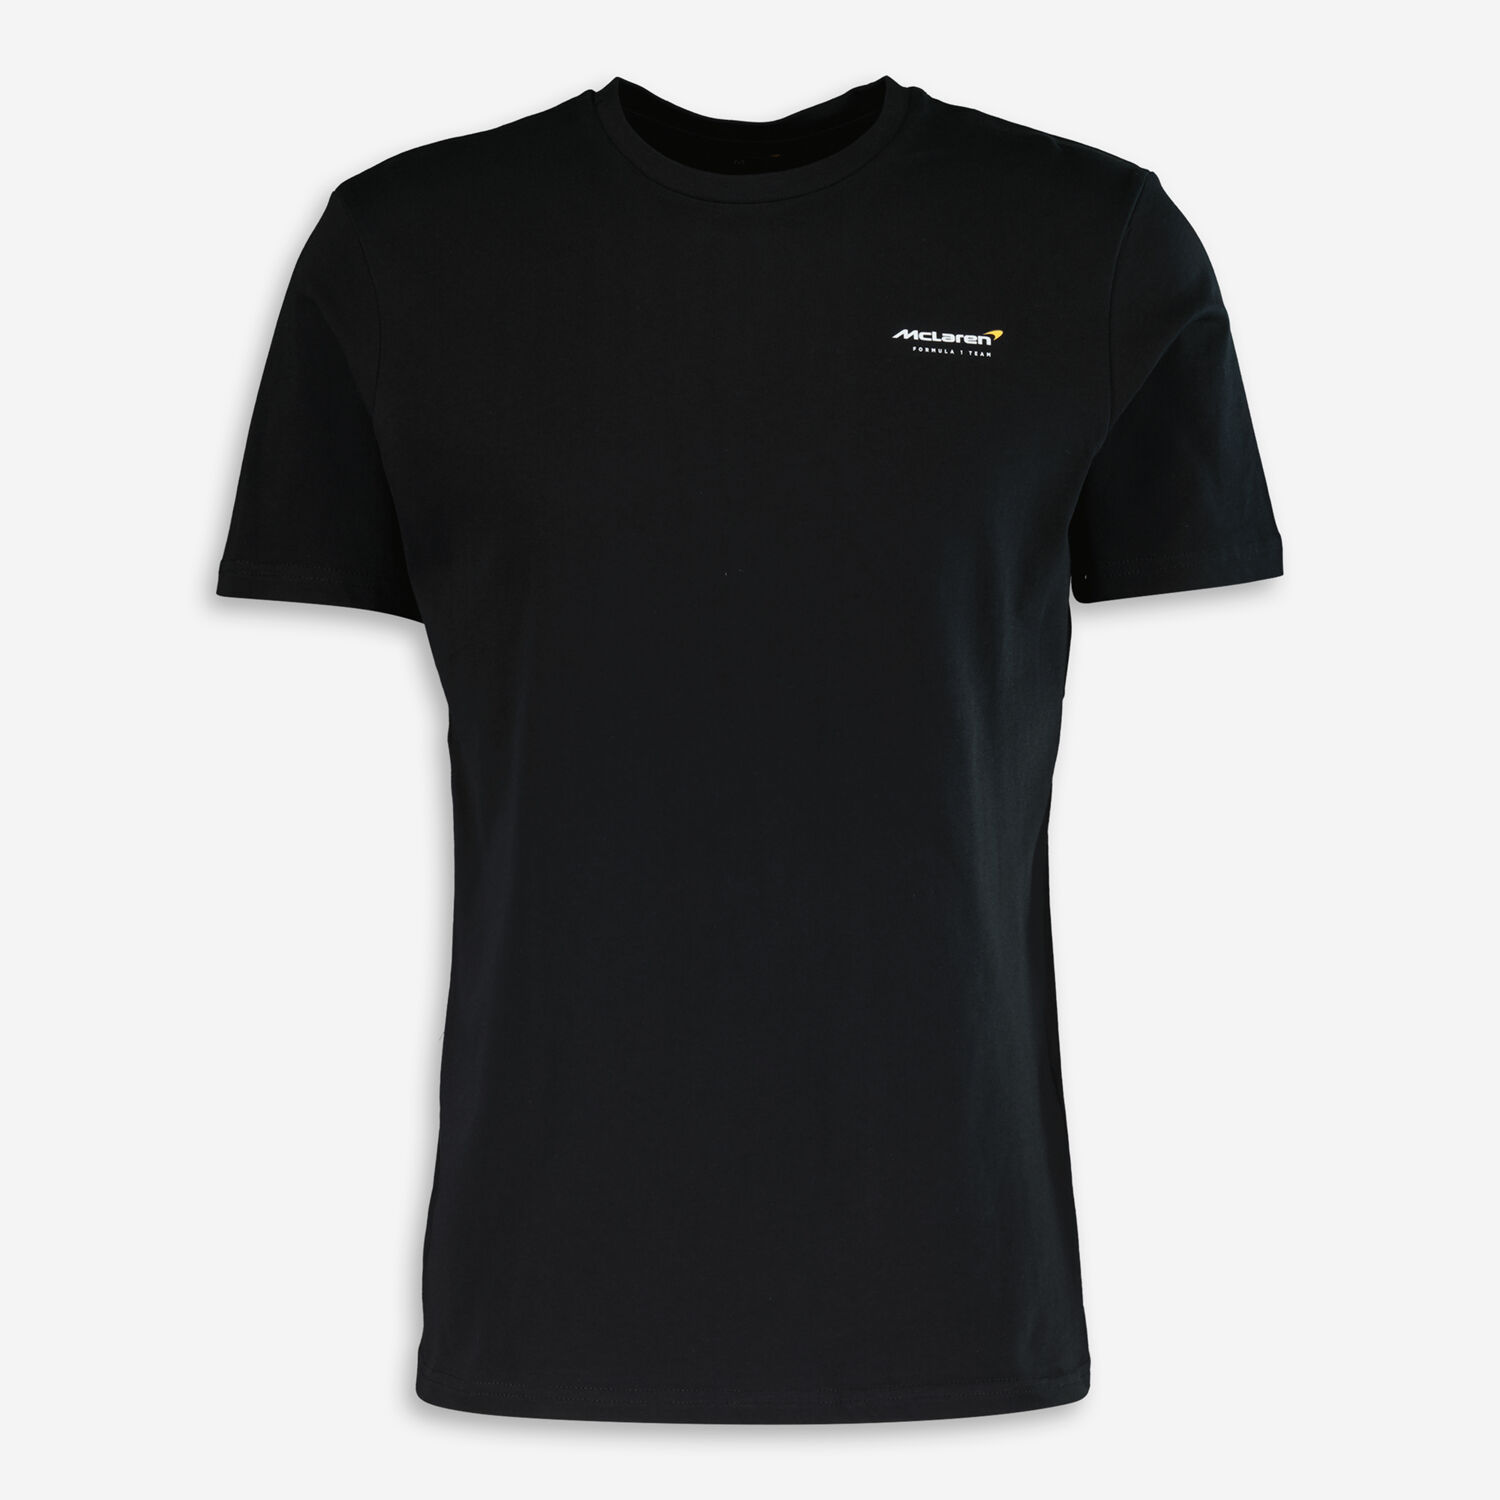 Черная футболка с логотипом MacLaren Castore